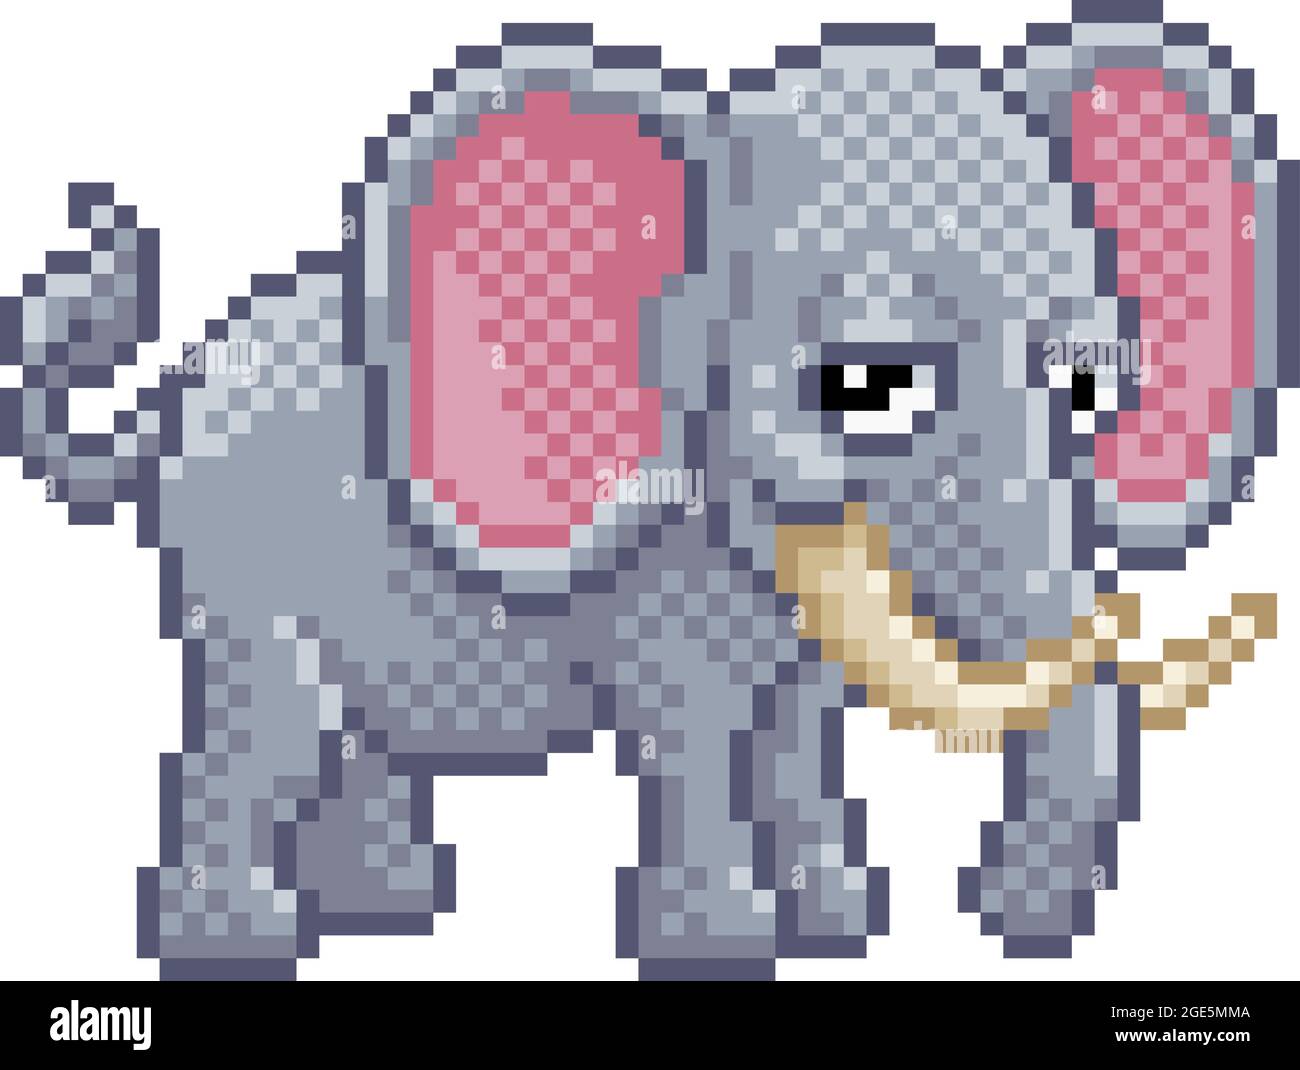 Dessin animé de jeu vidéo Elephant Pixel Art Arcade Illustration de Vecteur